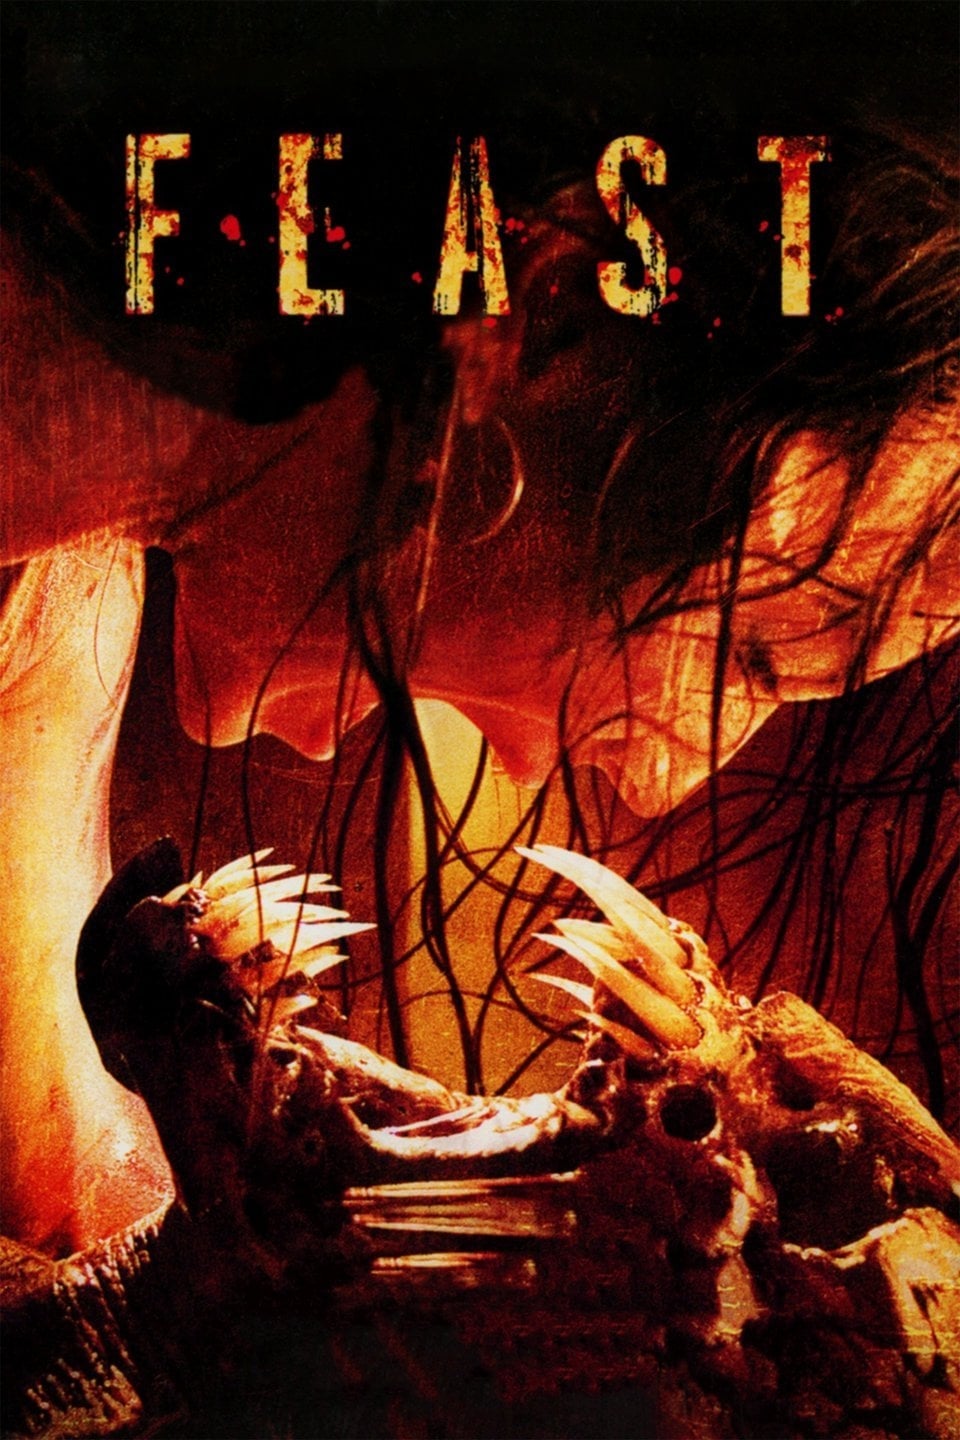 Feast: Atrapados (2005)